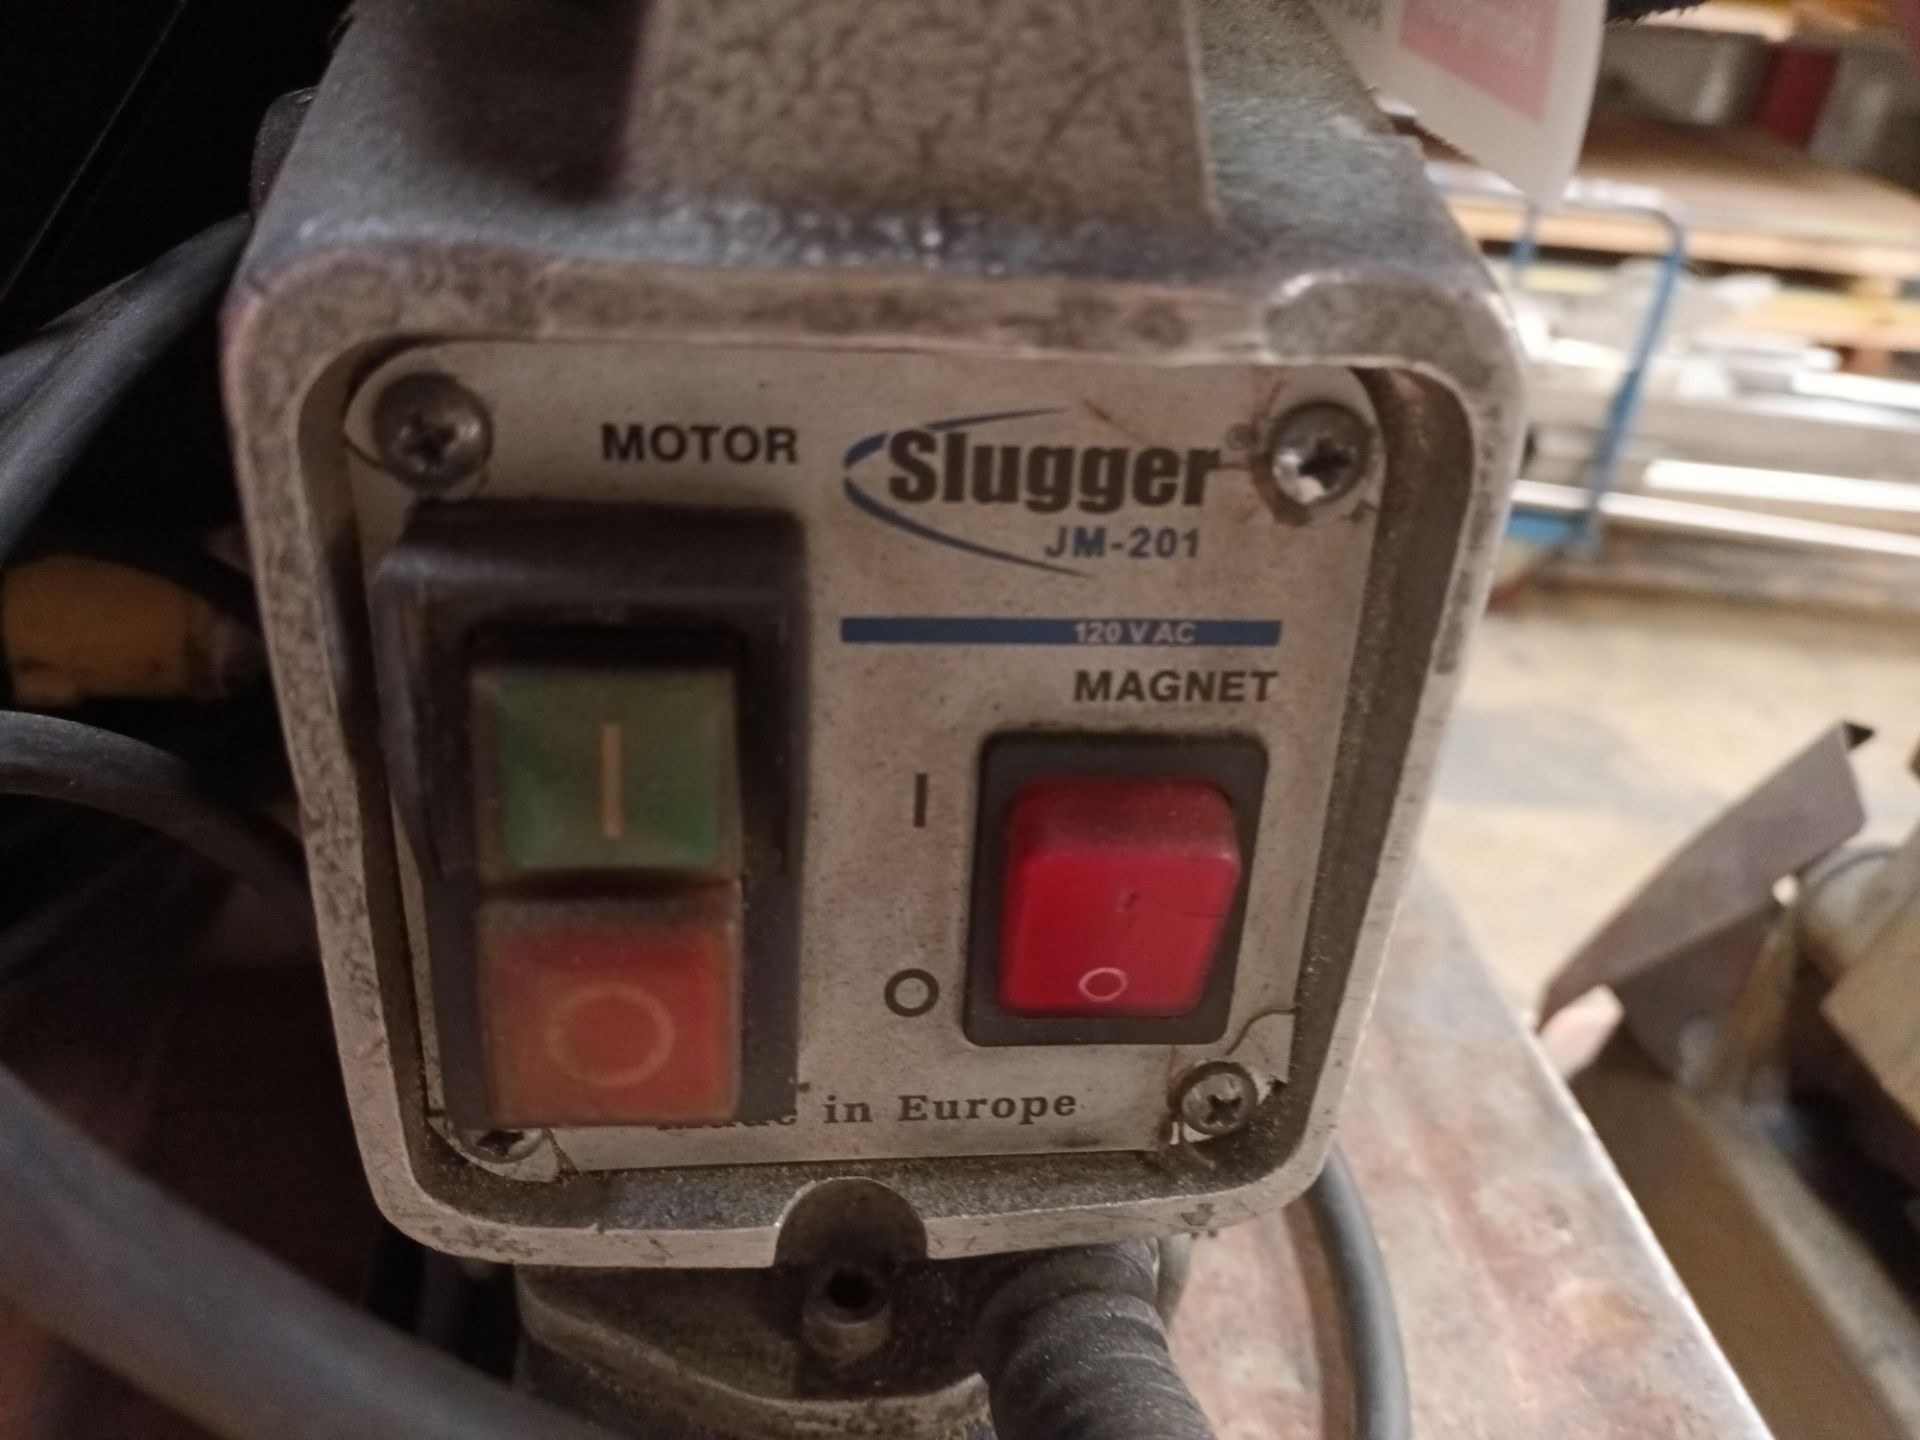 JEI Slugger JM-201 magnetic drilling machine - Image 3 of 4